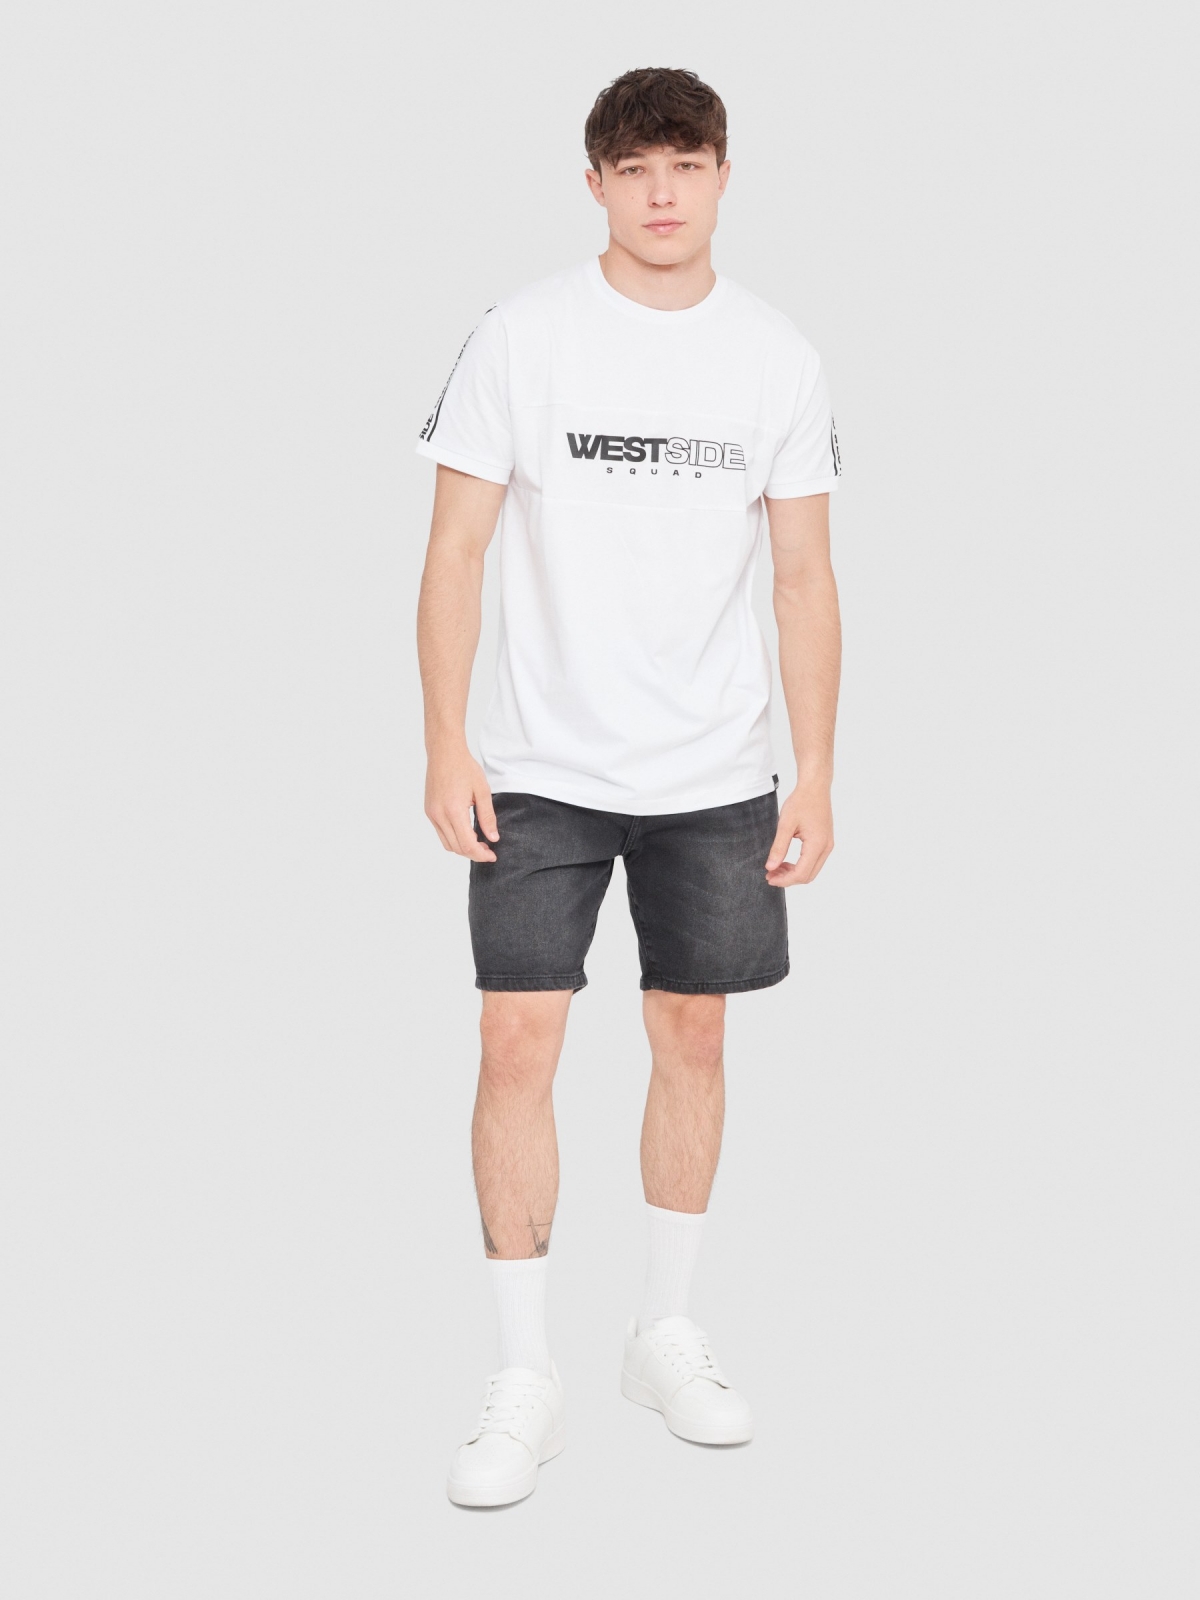 Camiseta Westside blanco vista general frontal